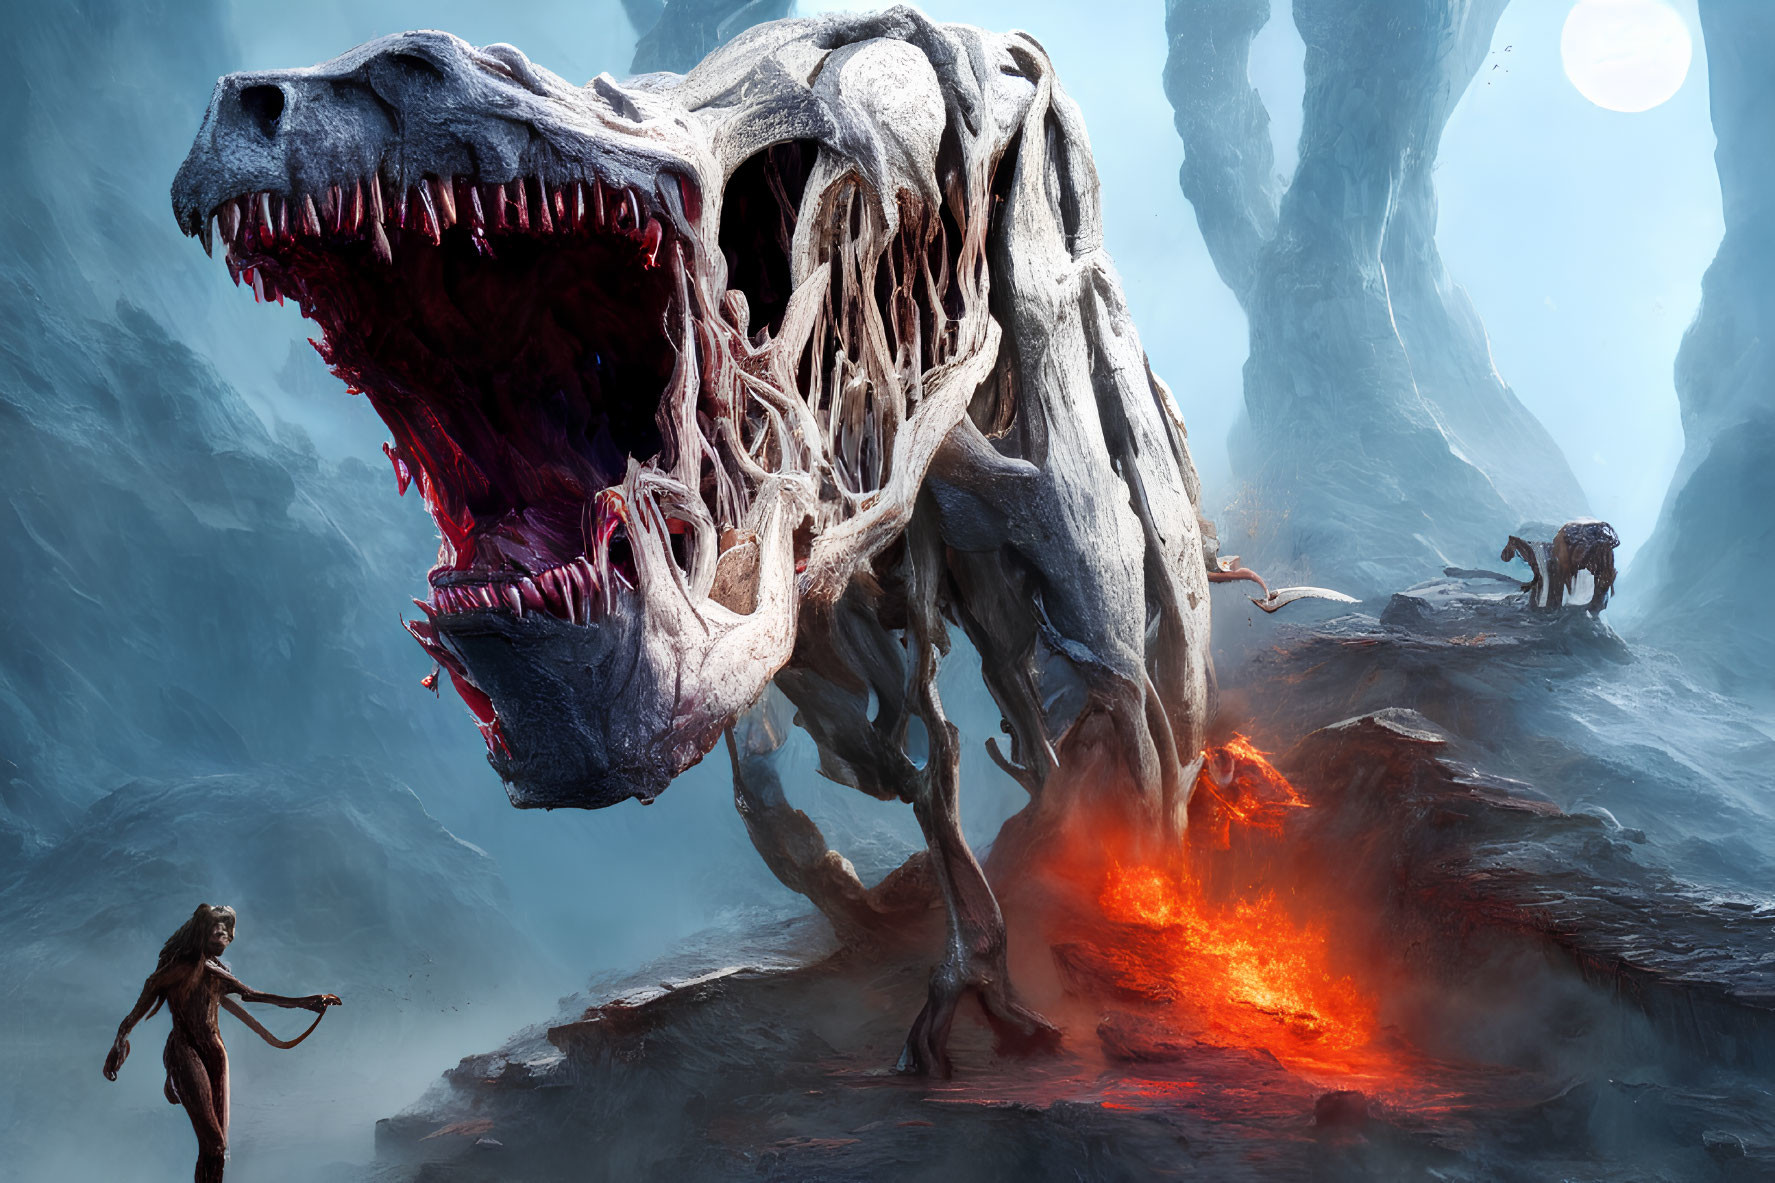 Human Confronts Gigantic Skeletal Beast in Desolate Volcanic Landscape